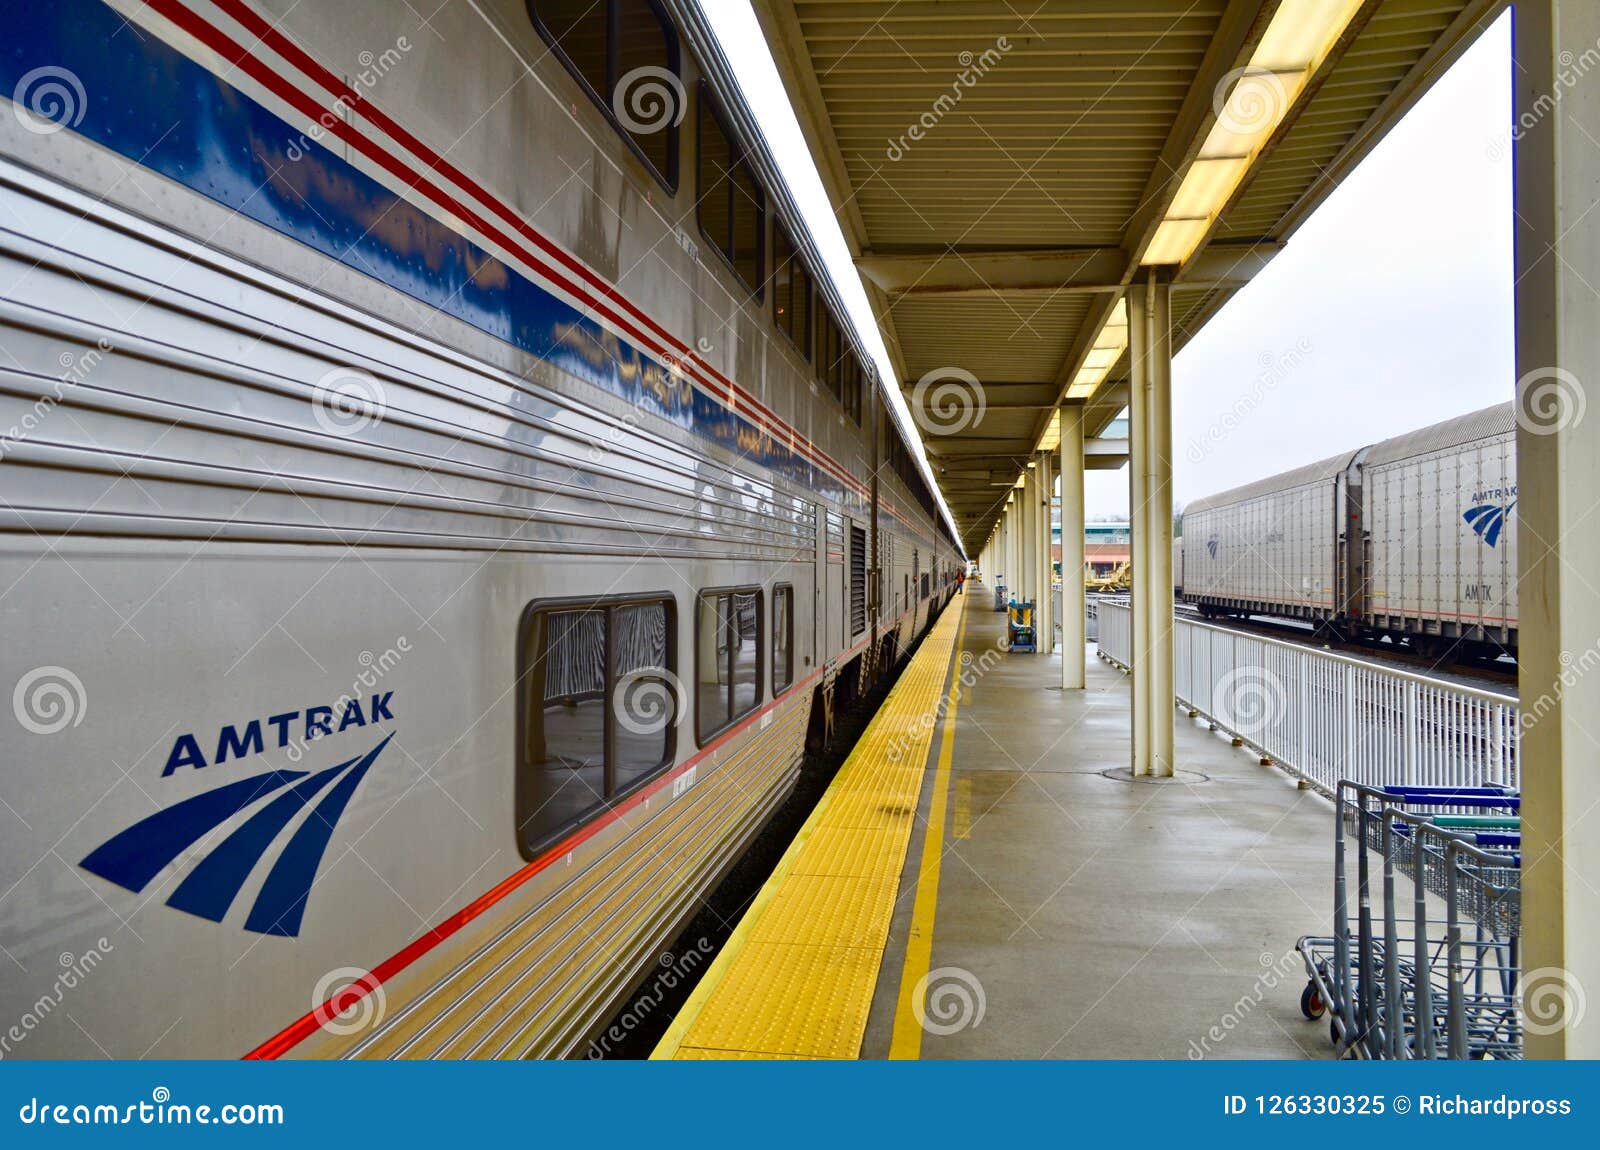 Amtrak Car Train at Lorton,Virginia Terminal Editorial Image - Image of ...